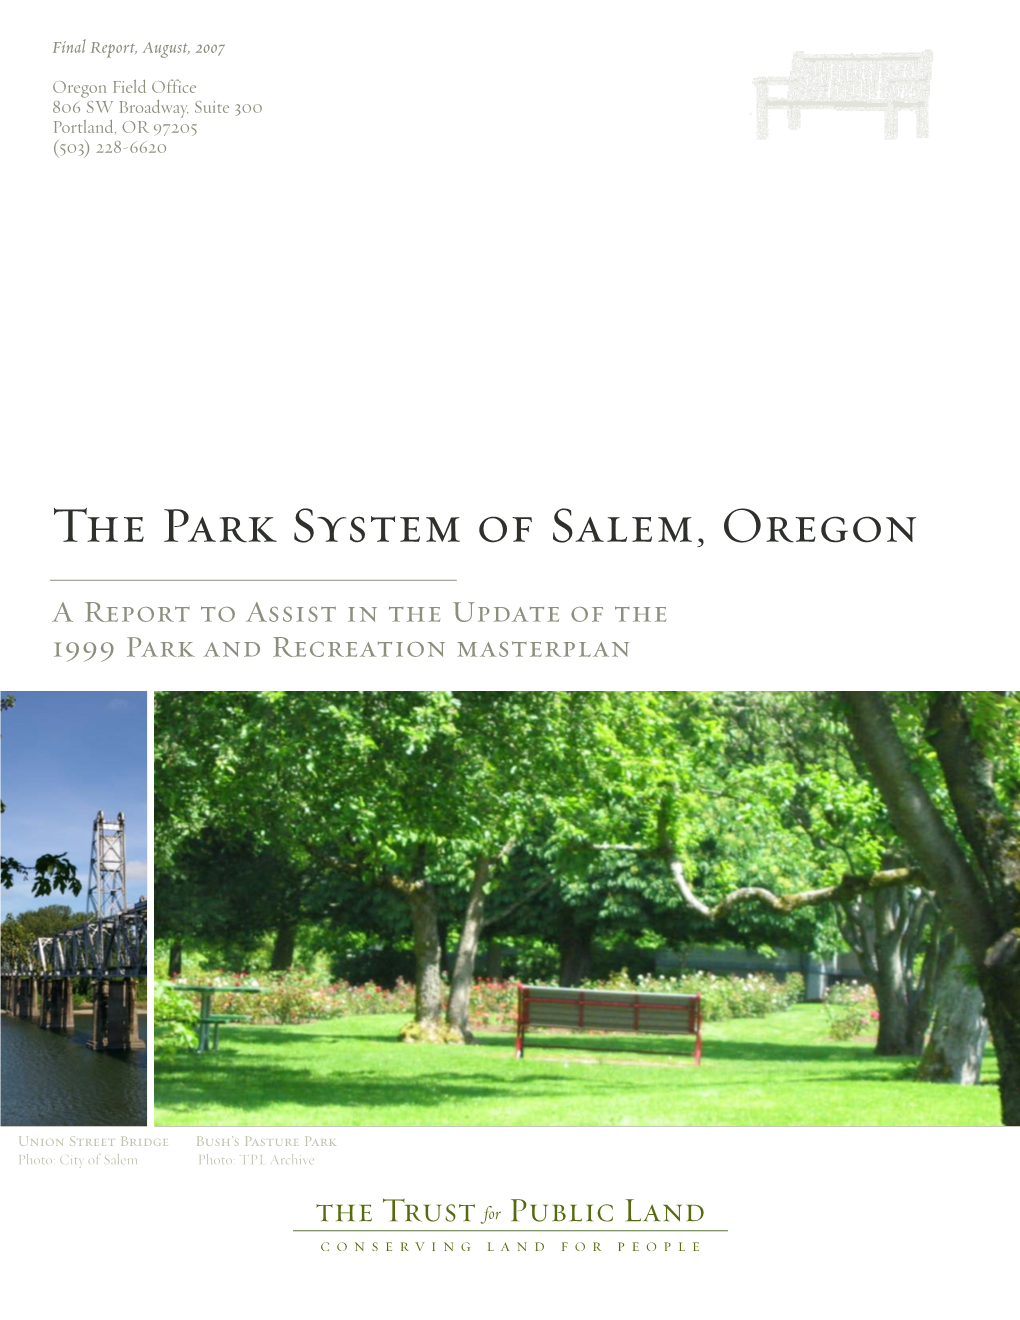 The Park System of Salem, Oregon